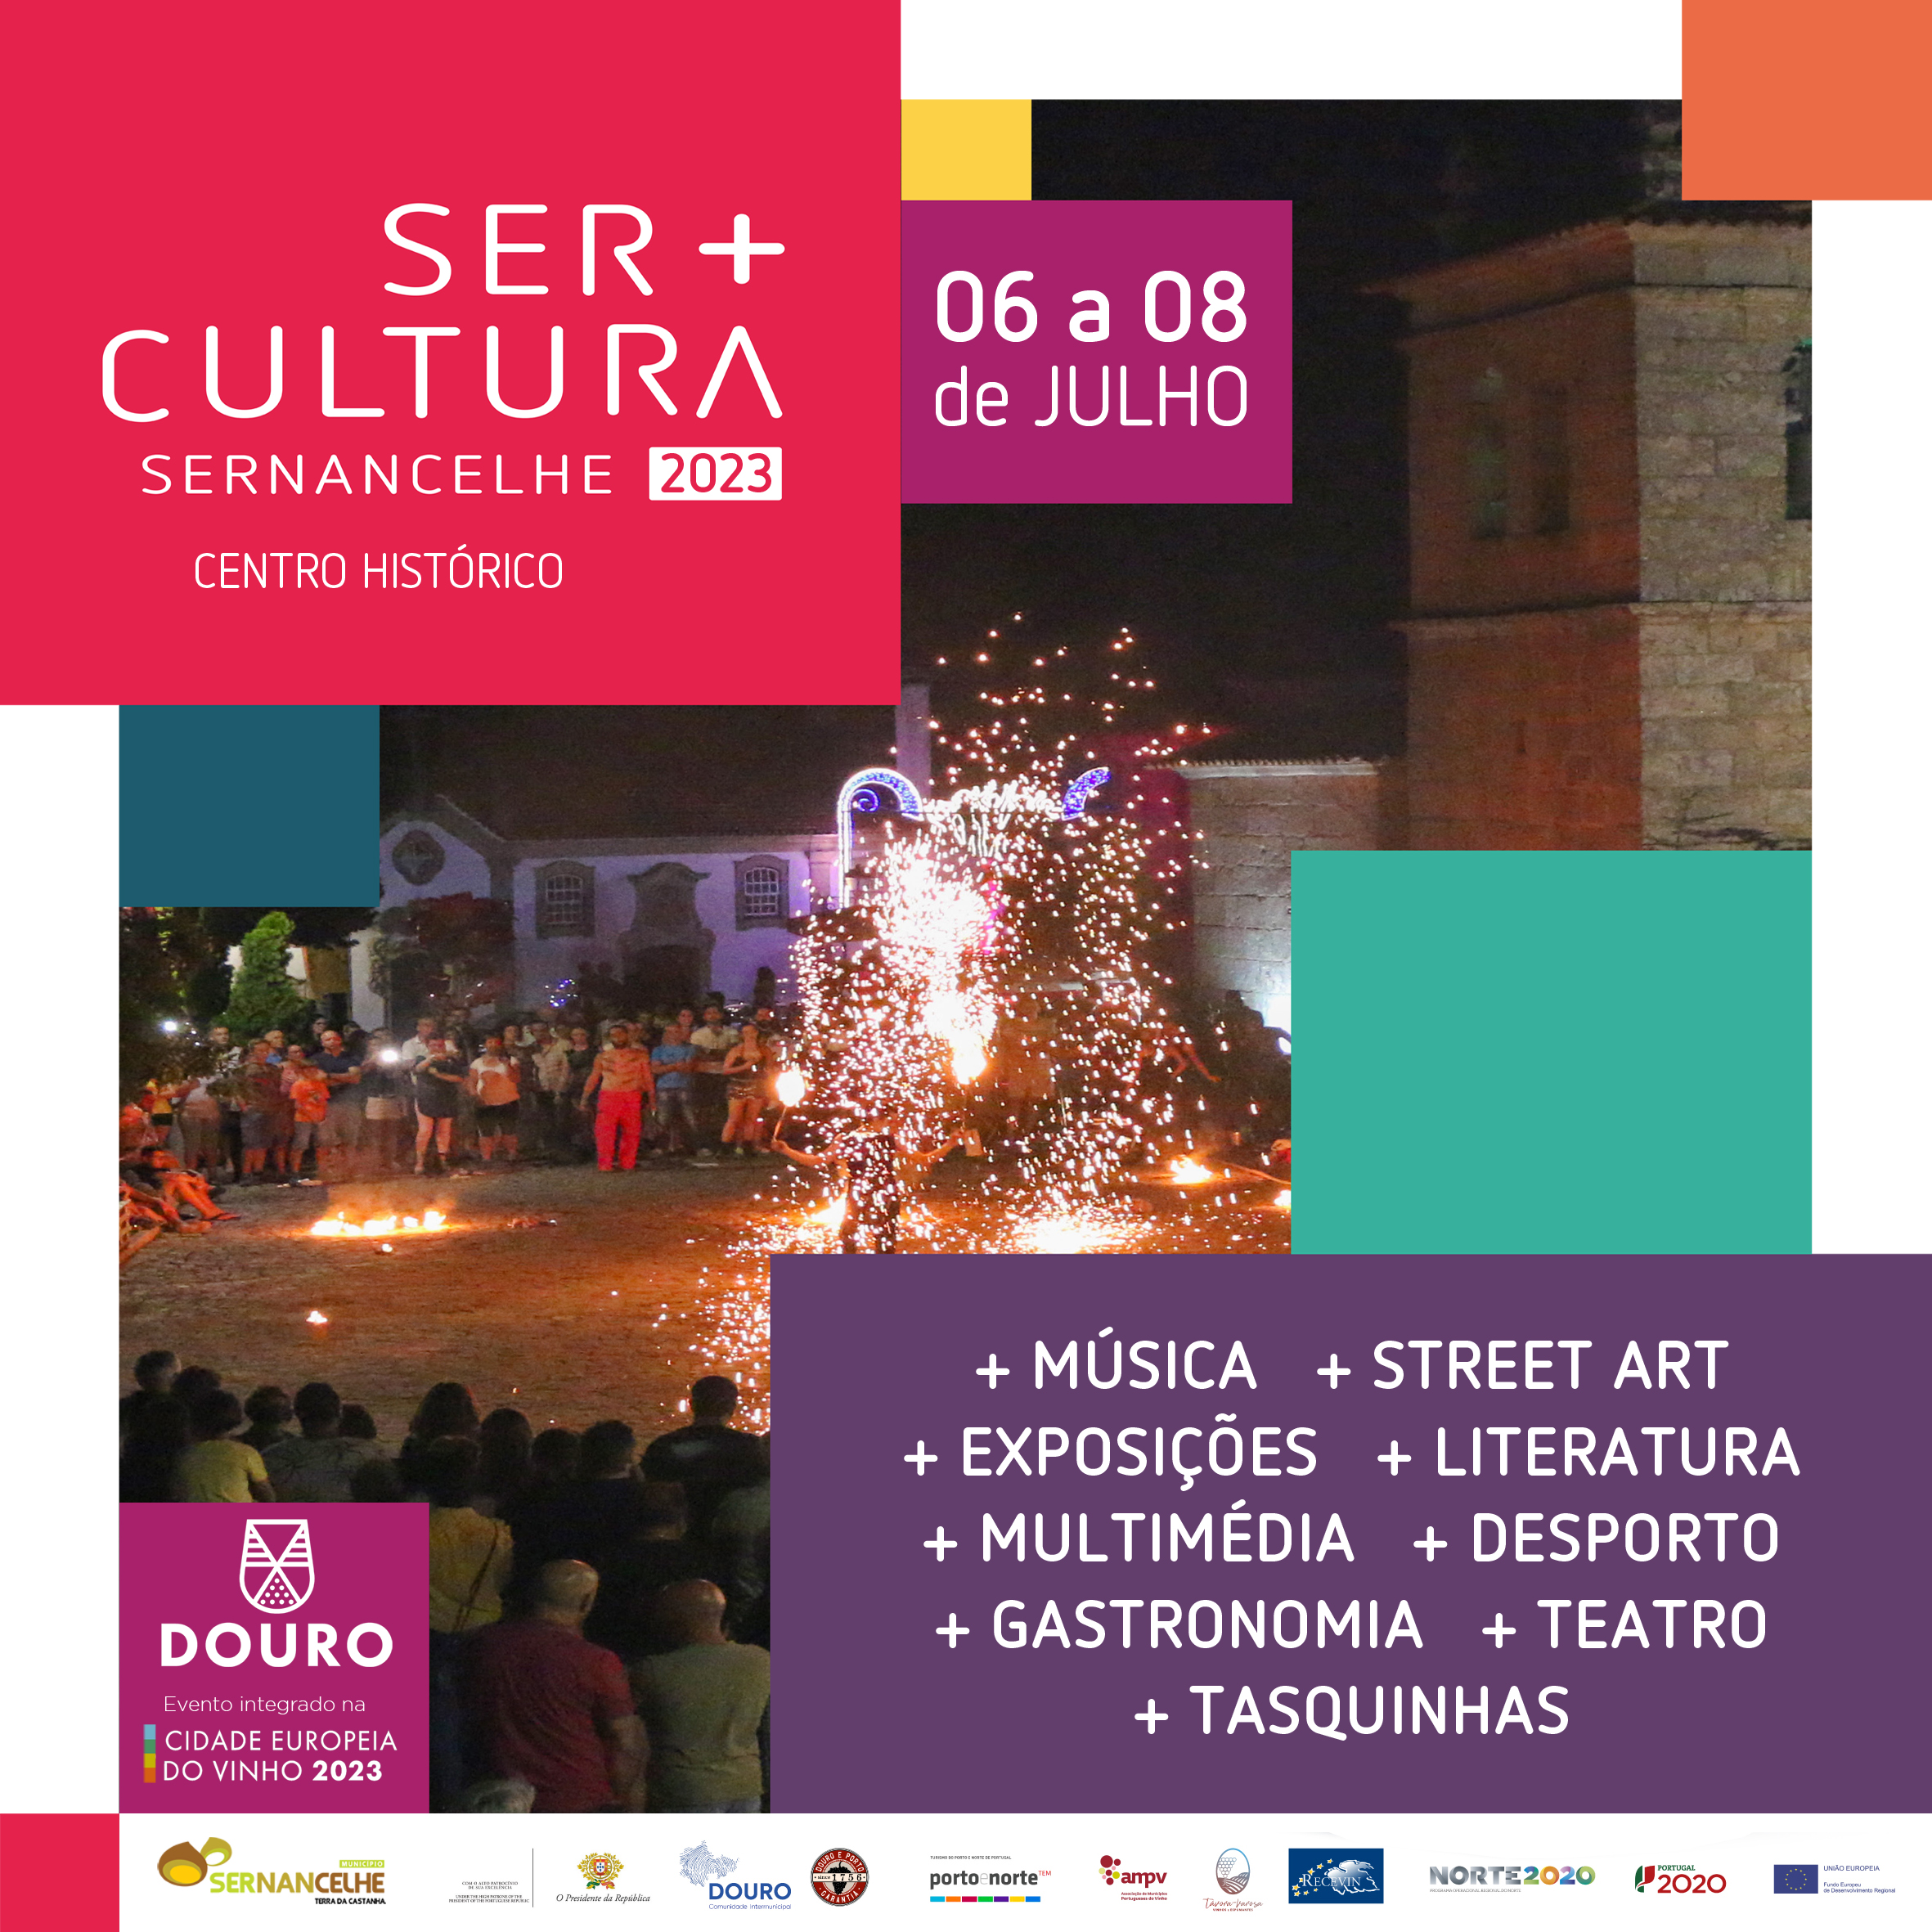 Ser + Cultura, Sernancelhe 2023